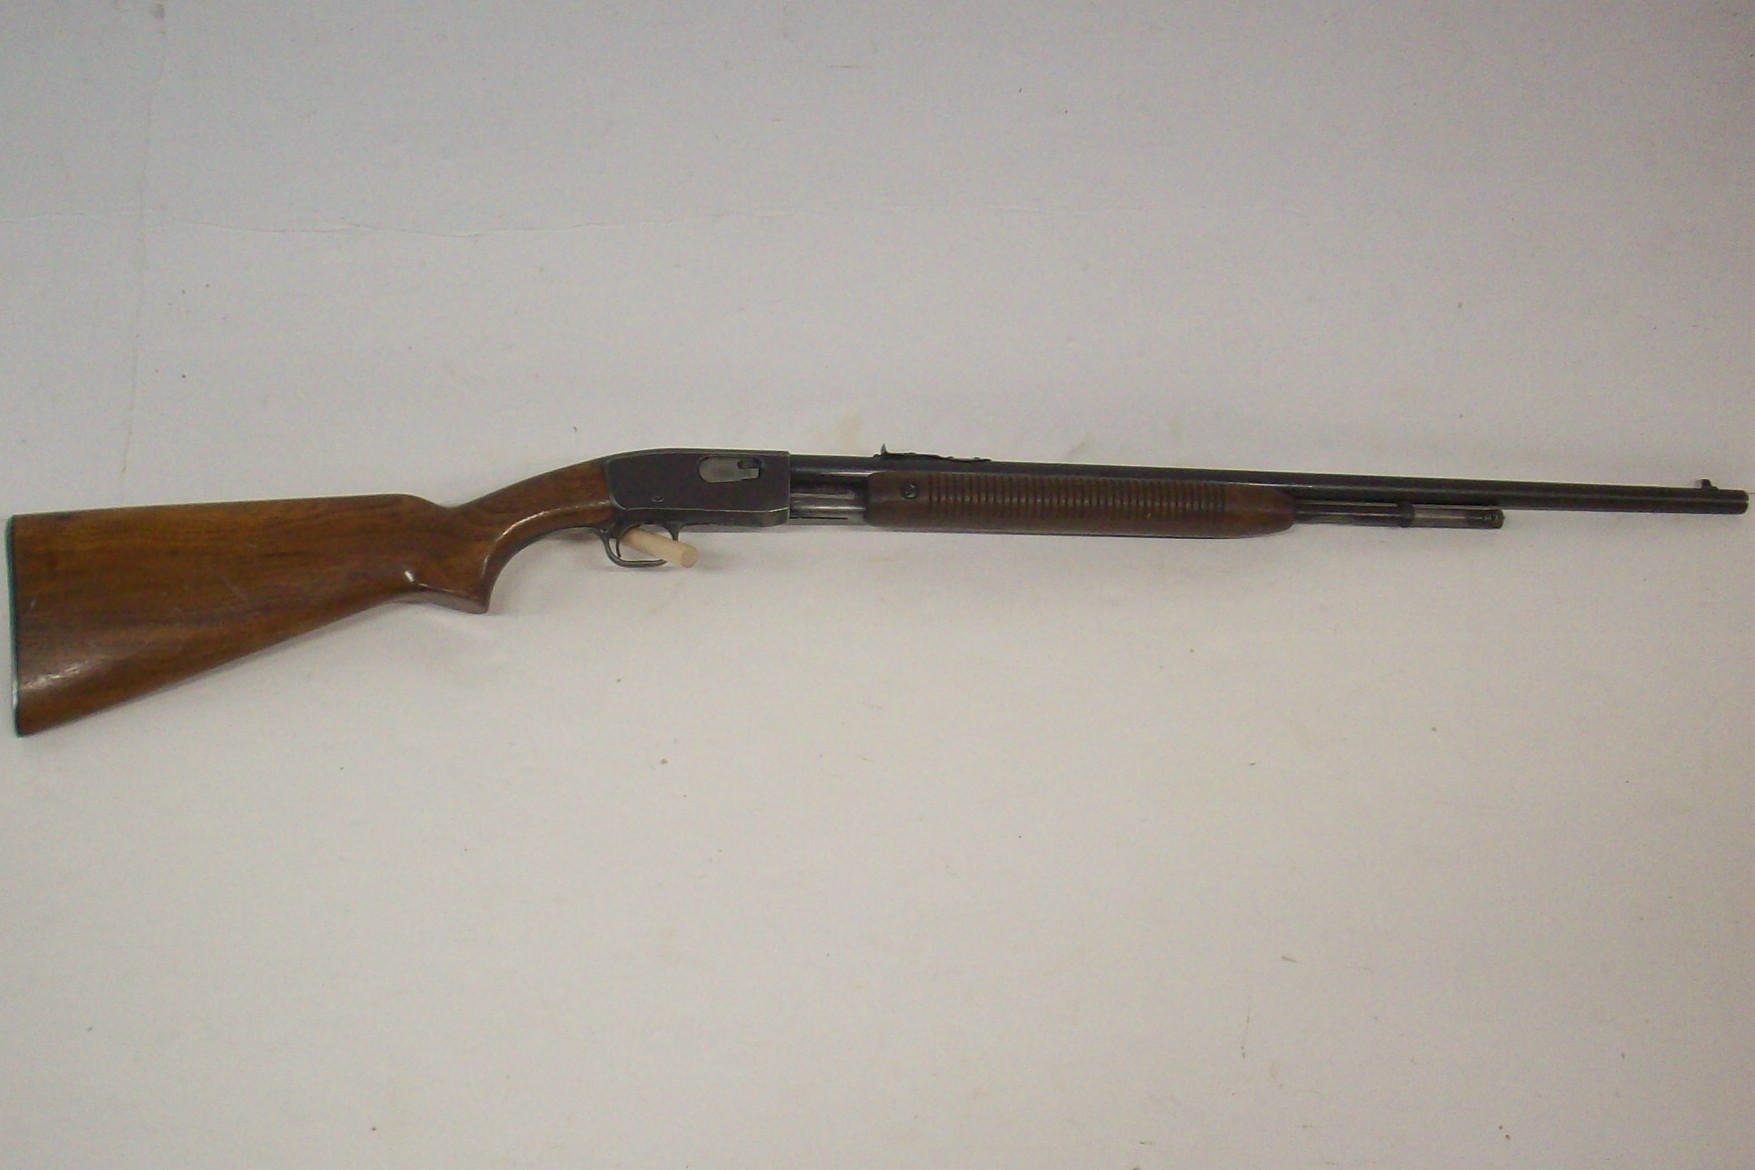 Remington Model 121 Rimfire Rifle Parts